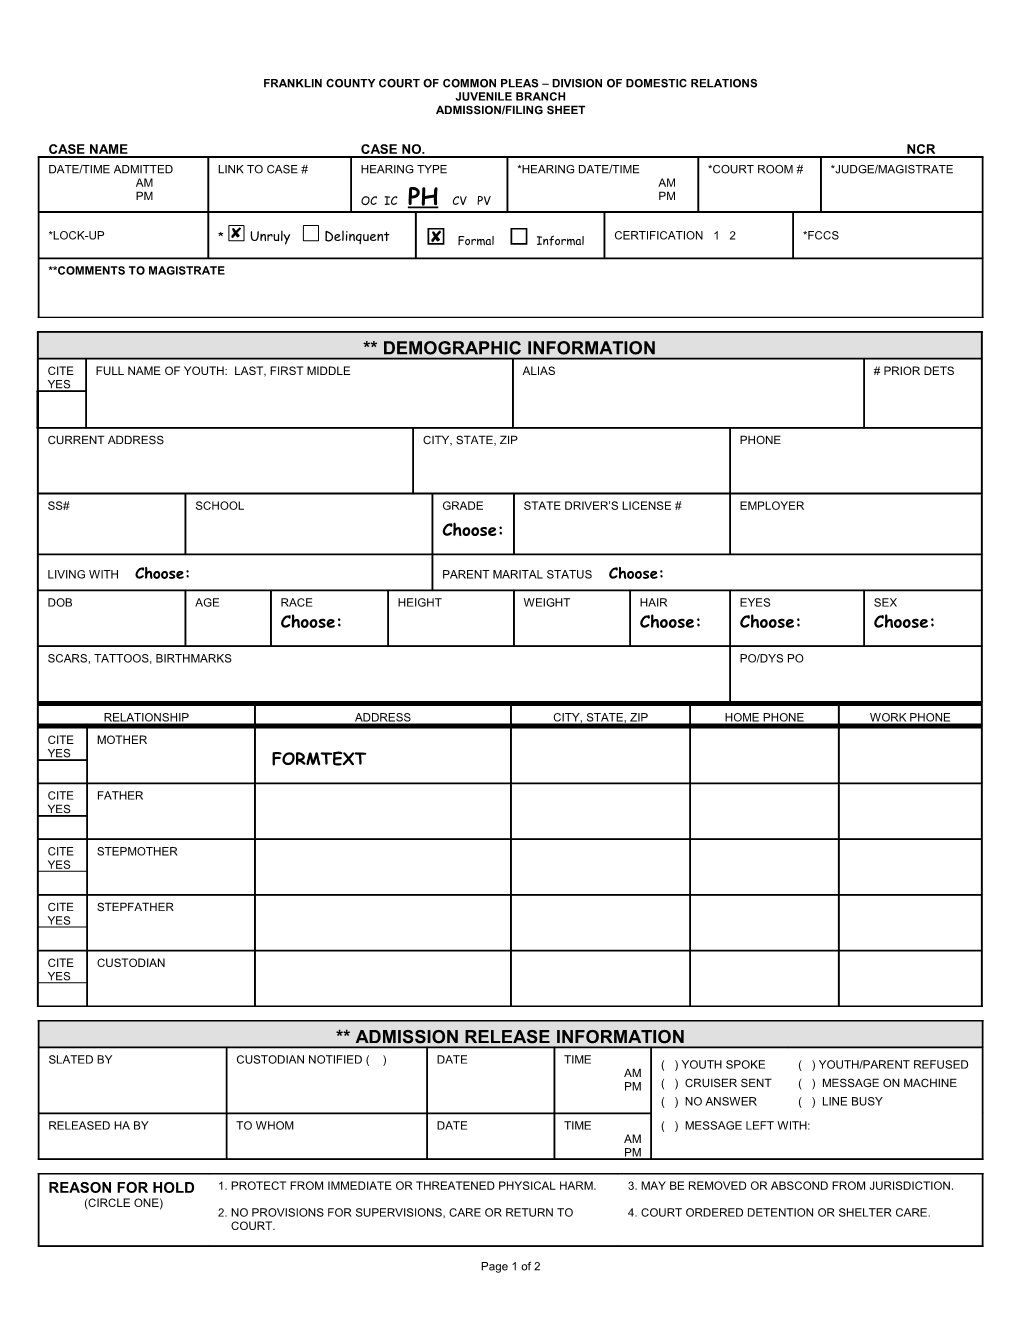 Truancy Filing Form 2 Admission Filing Sheet